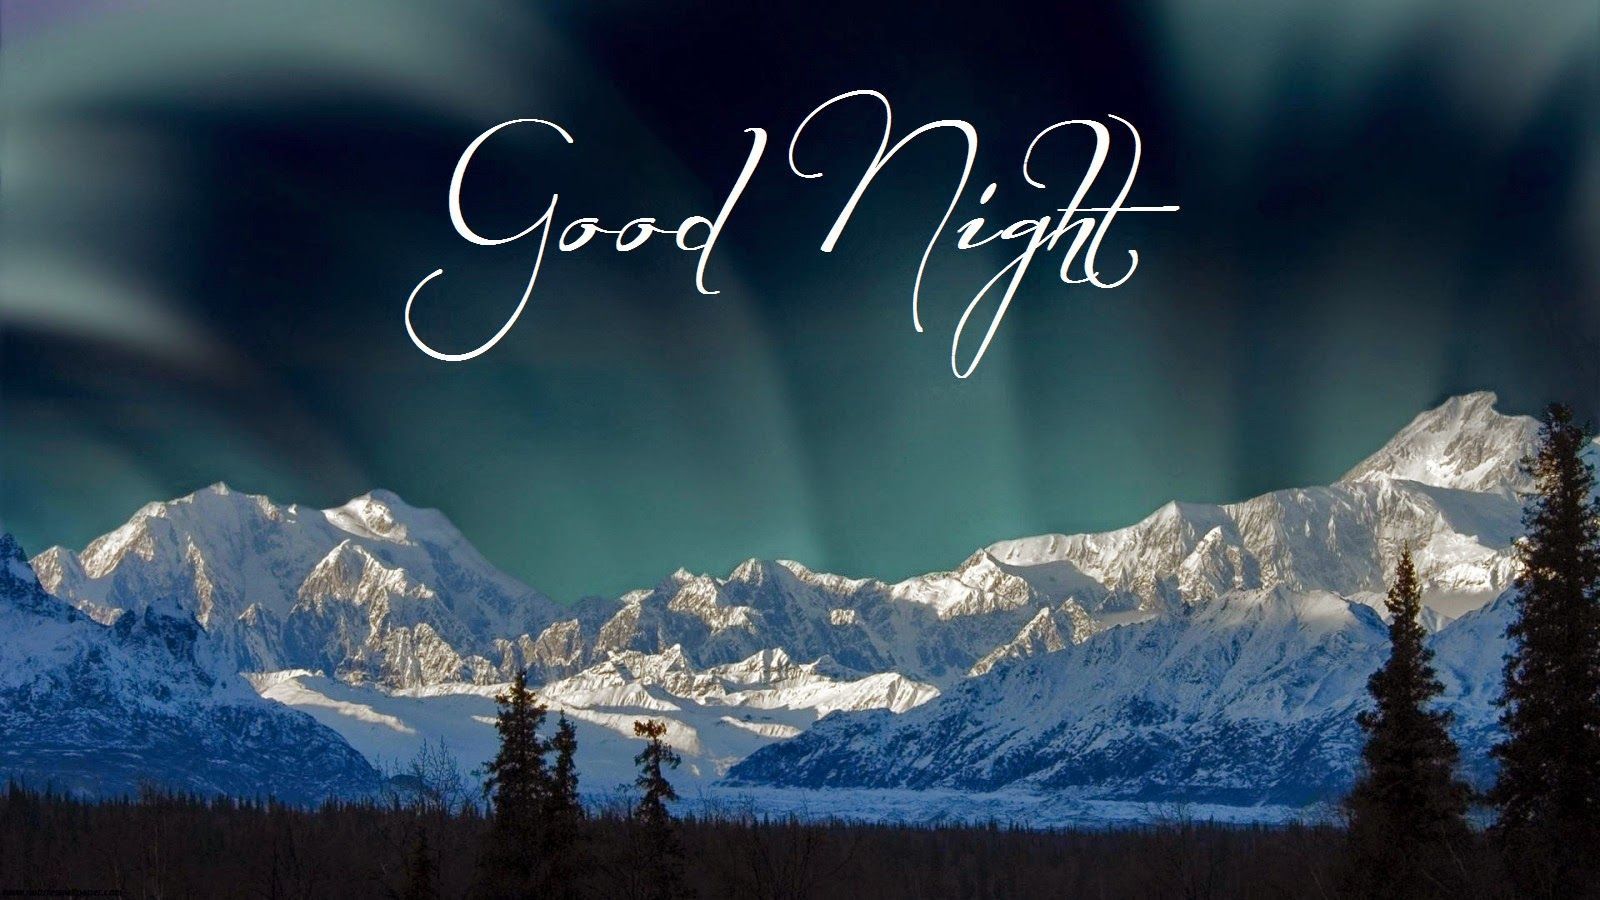 Good Night image HD free download. Good night wallpaper, Lovely good night, Good night image hd